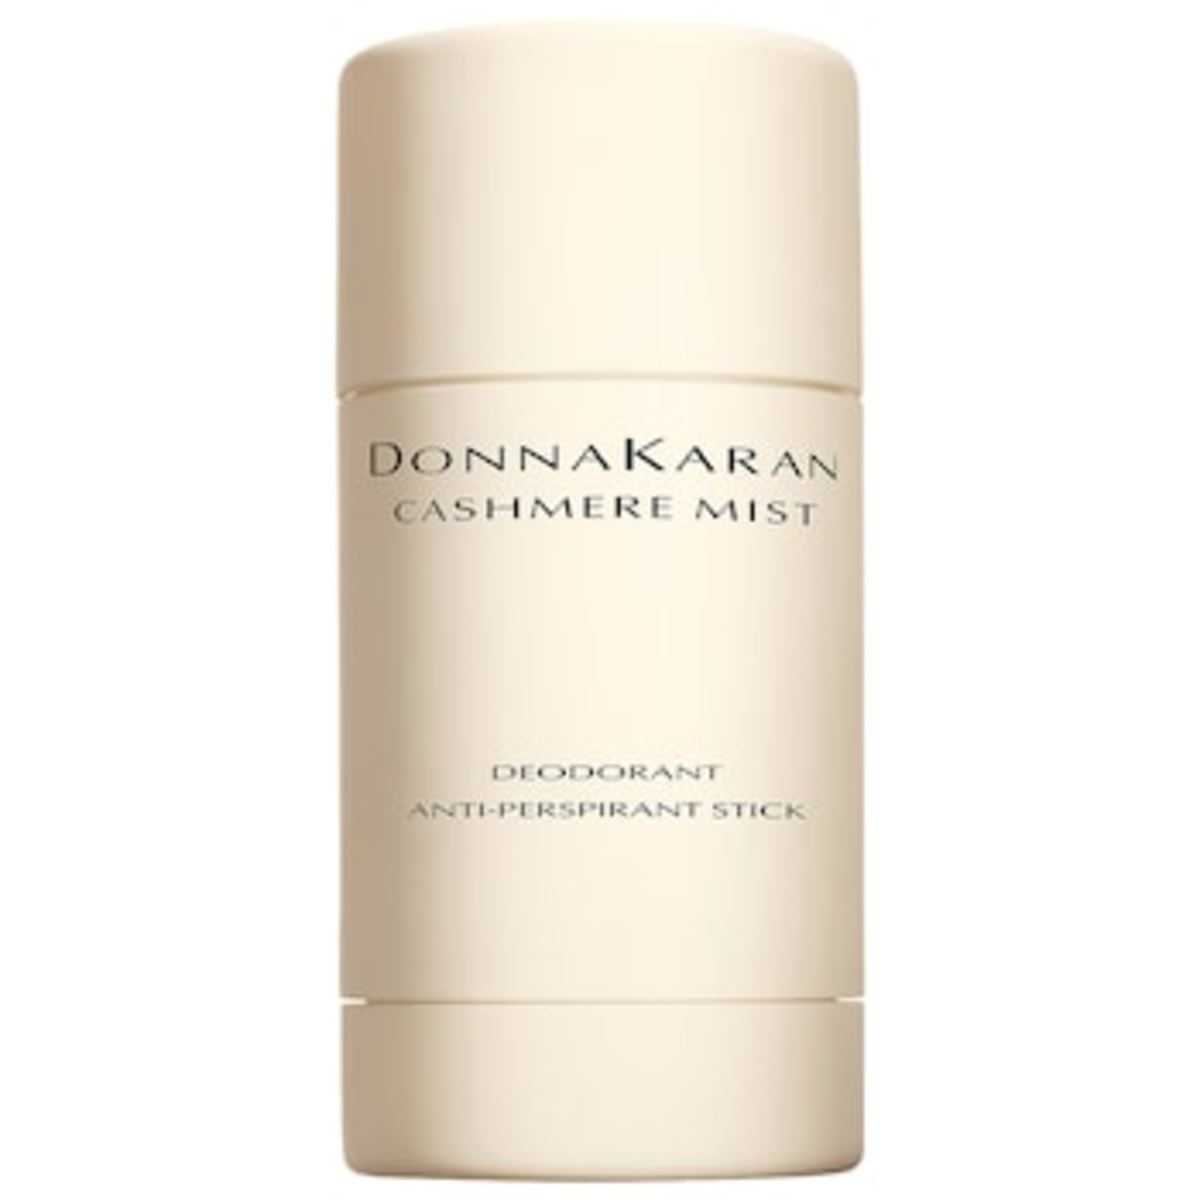 donna-karan-cashmere-mist-deodorant